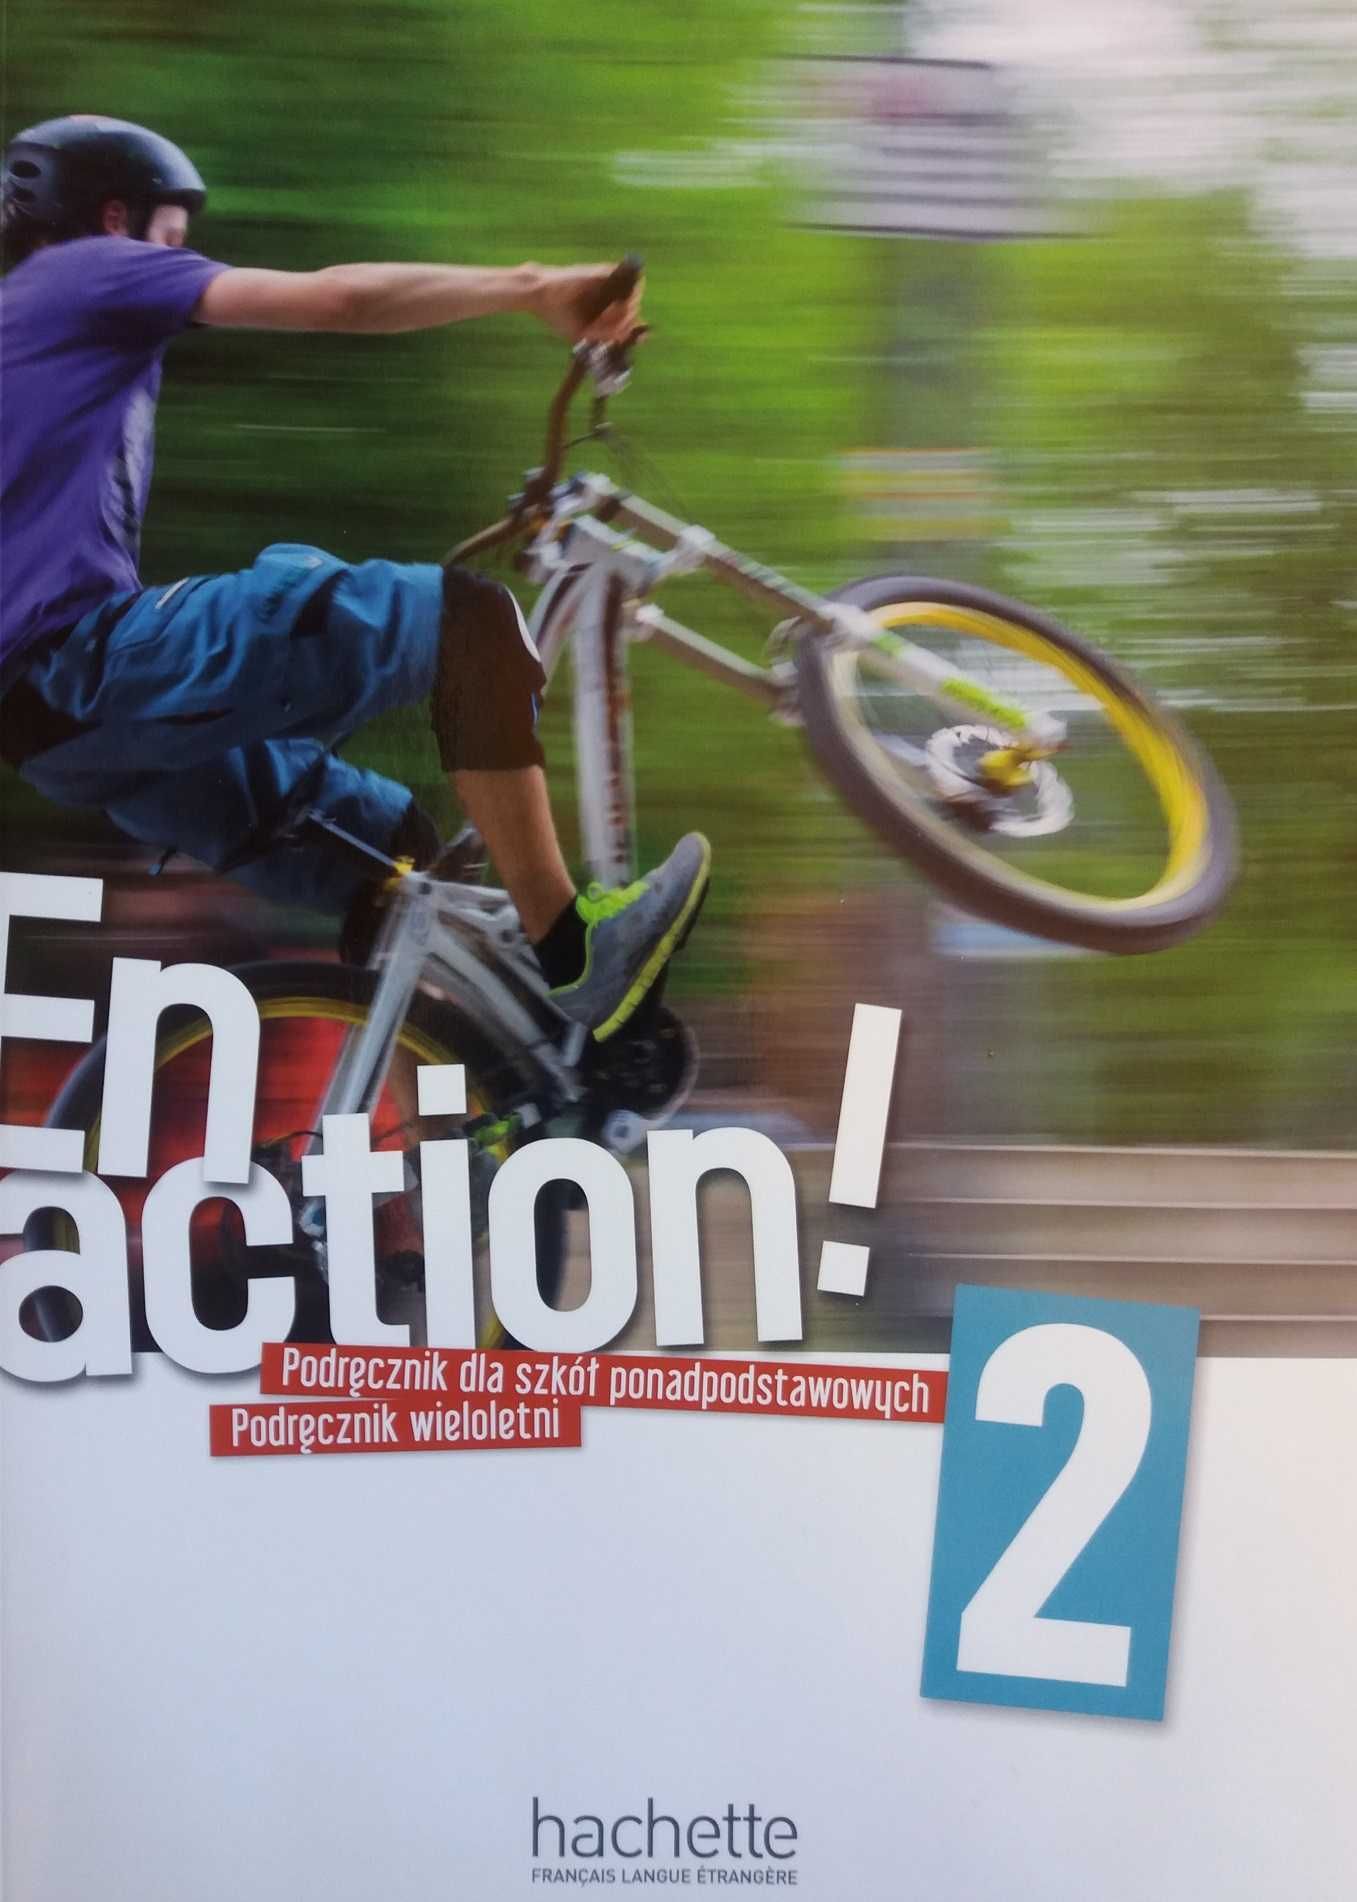 En action! 2 Podręcznik wieloletni + audio online. Hachette